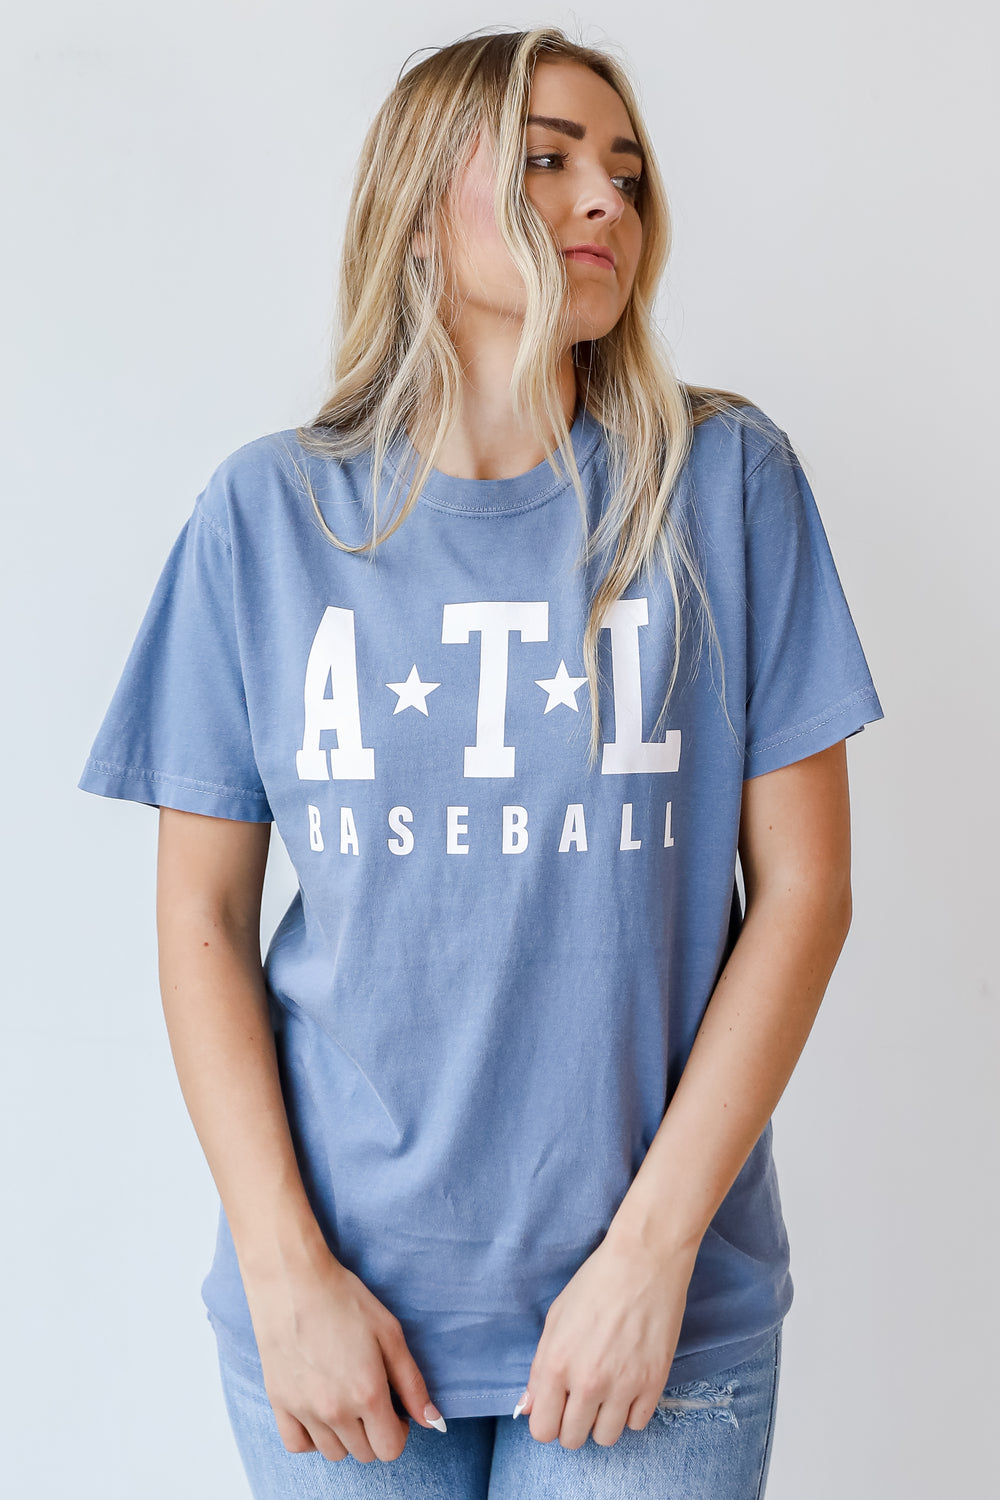 ATL Star Baseball Tee from dress up